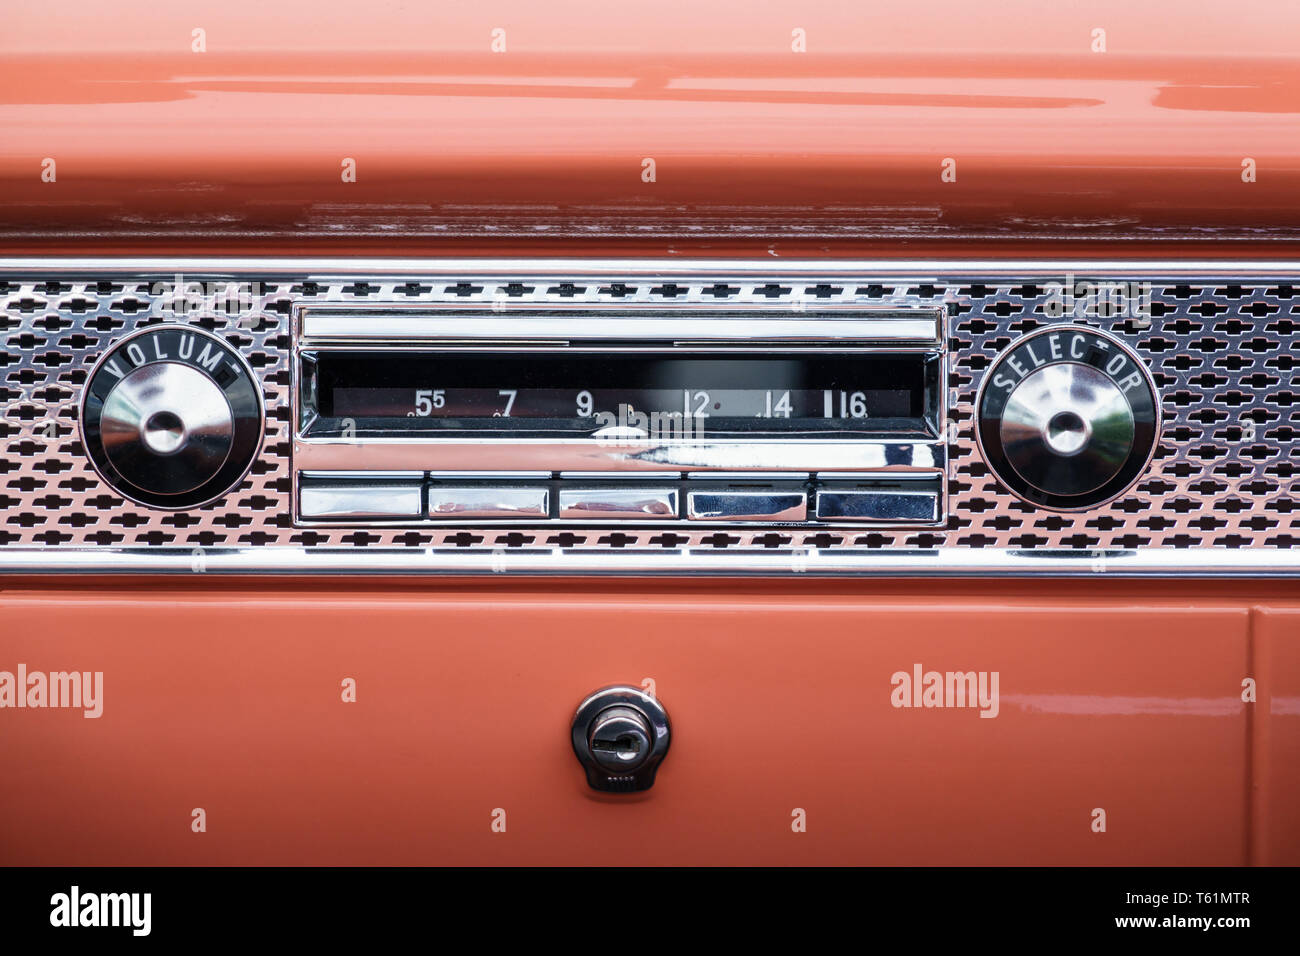 Old classic car radio in the dashboard Stock Photo - Alamy